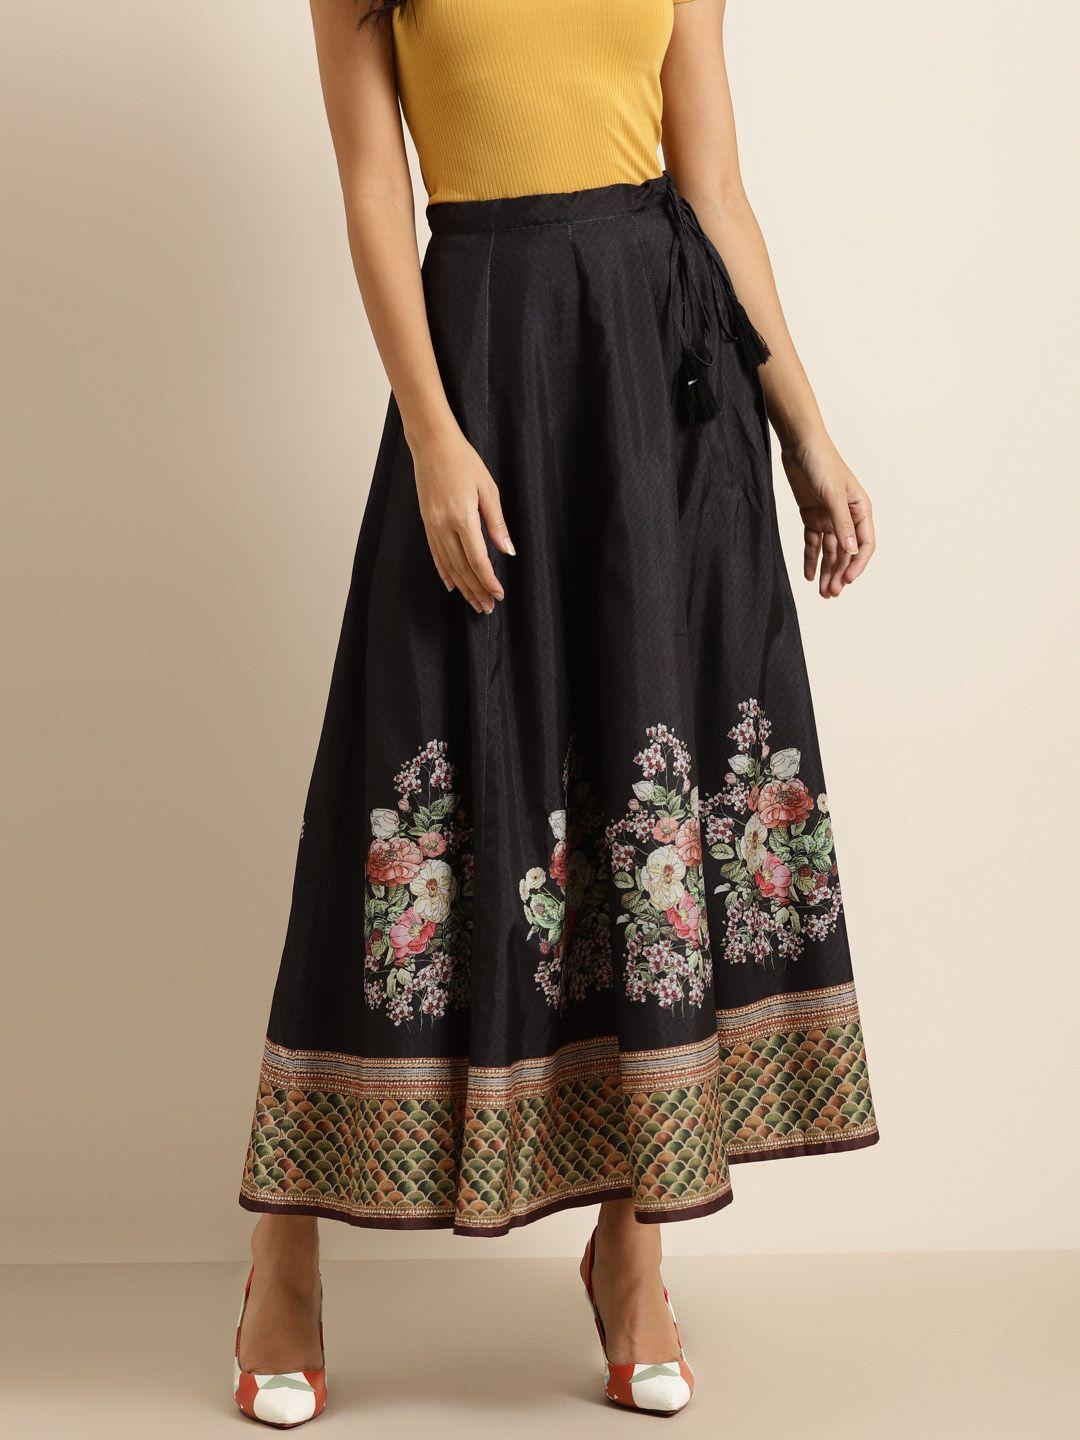 shae by sassafras women black floral print flared maxi skirt